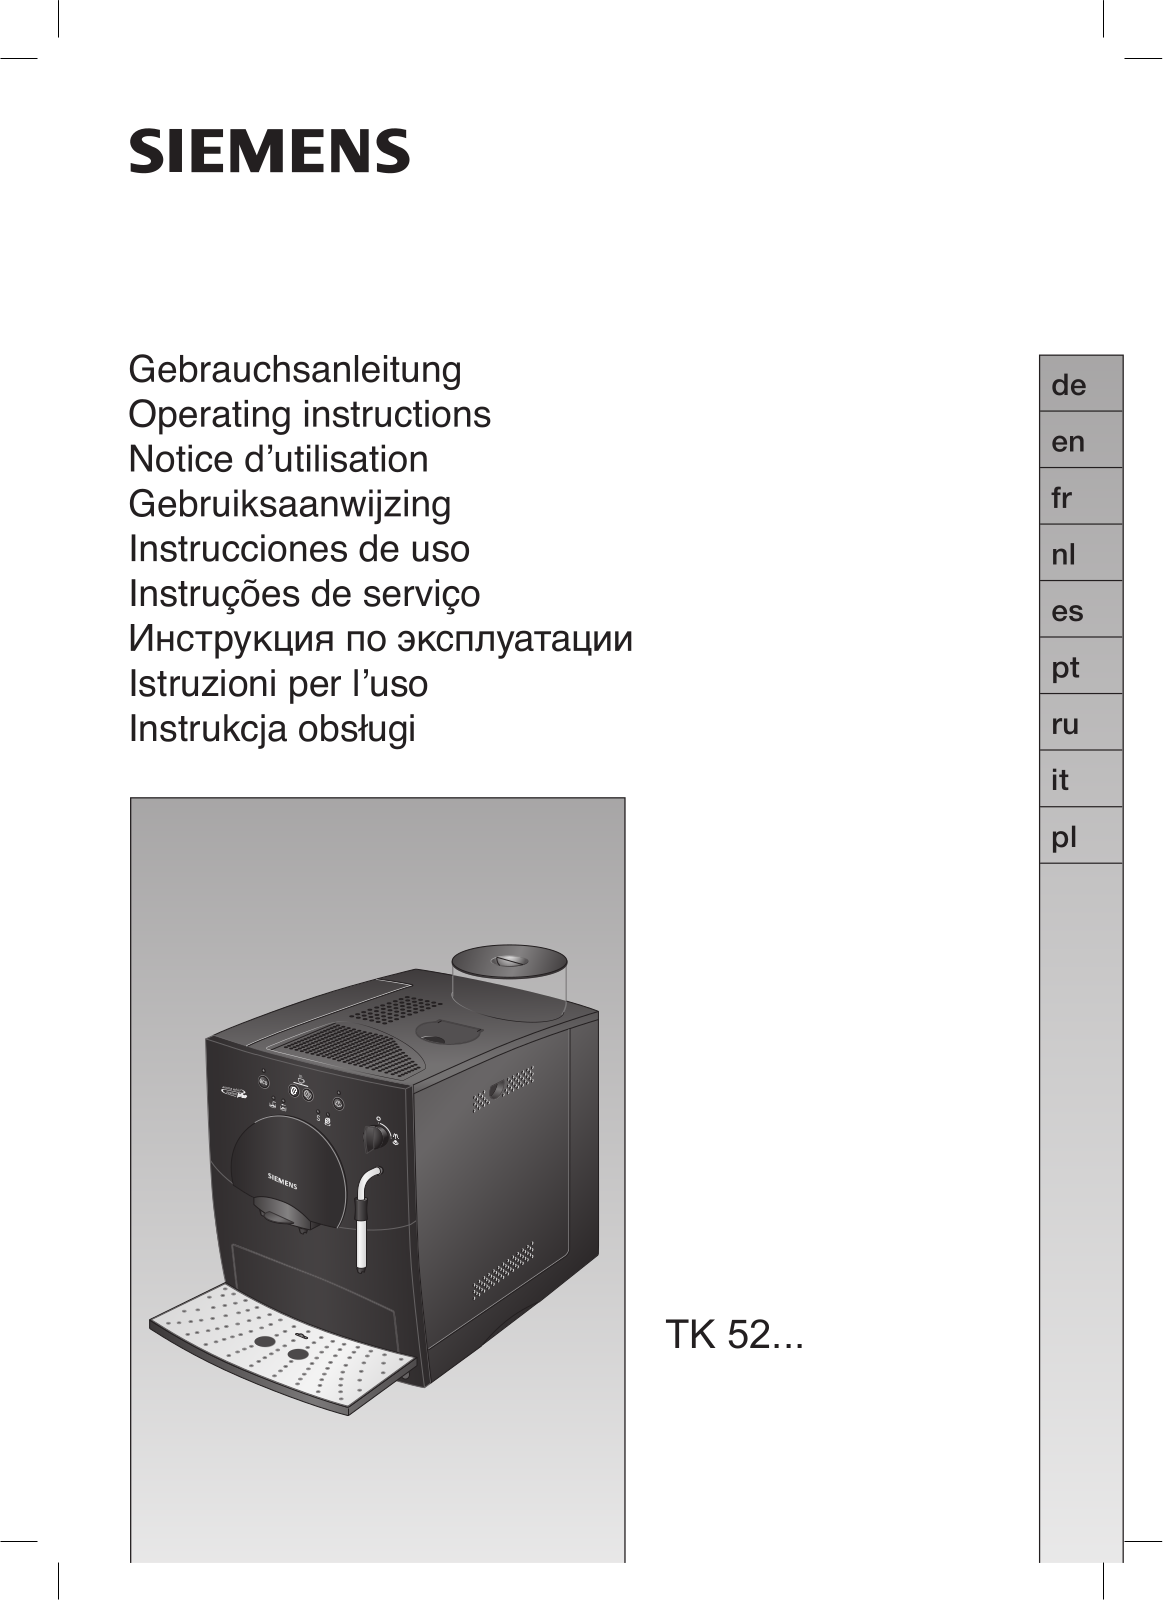 SIEMENS TK52001 User Manual